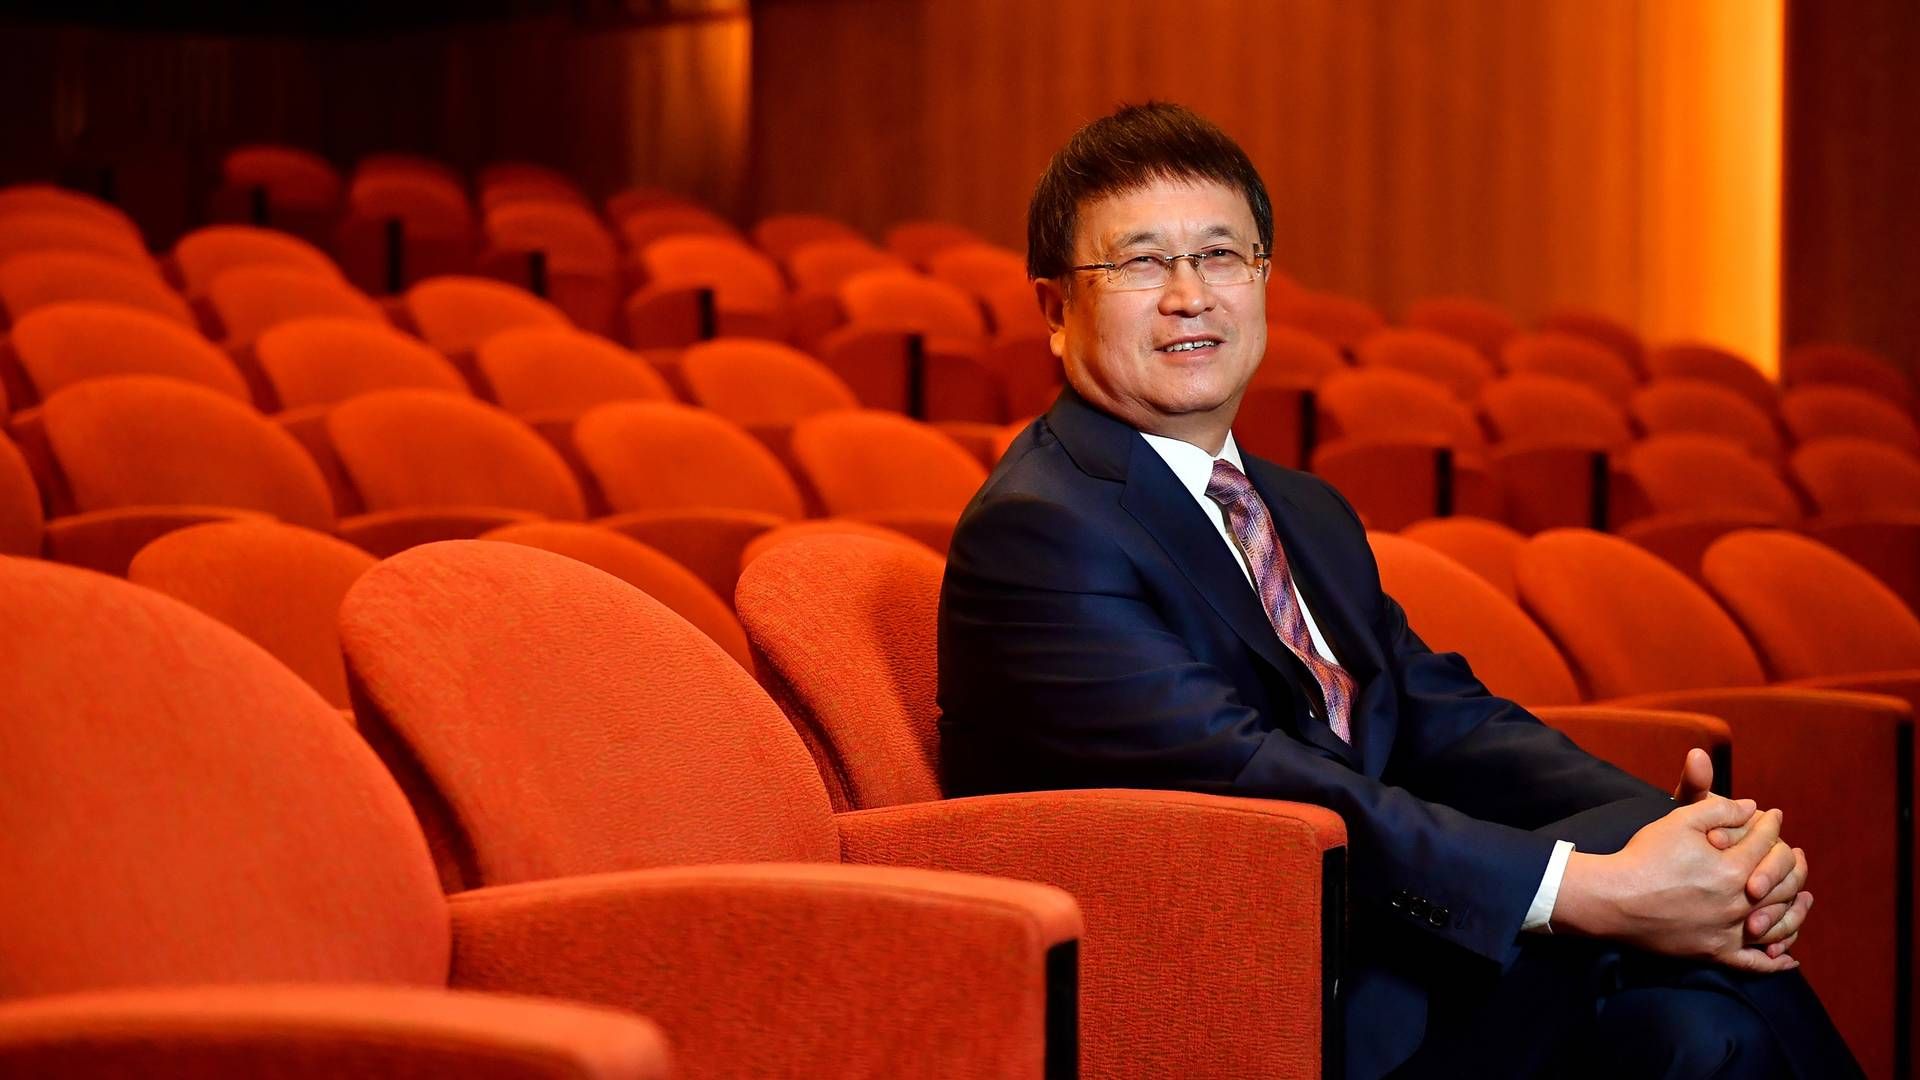 Ren Yanlin founded Yangzijiang Financial in 2008. He will take over as CEO of the company in April following the departure of Vincent Toe. | Photo: Lim Yaohui/AP/Ritzau Scanpix